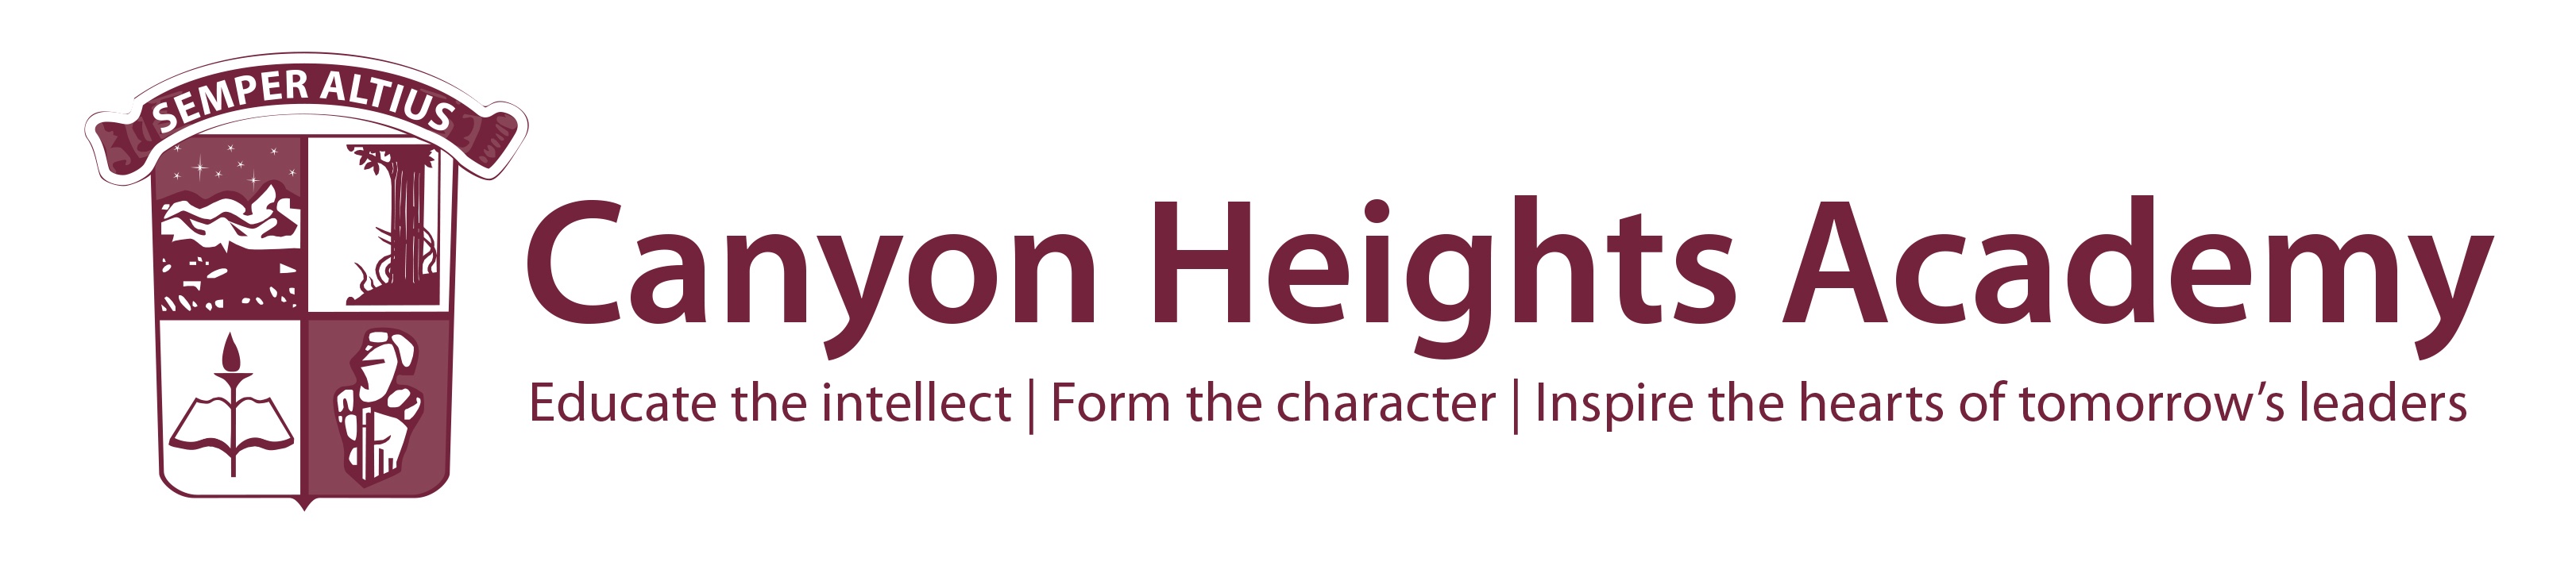 Canyon Heights Academy Logo